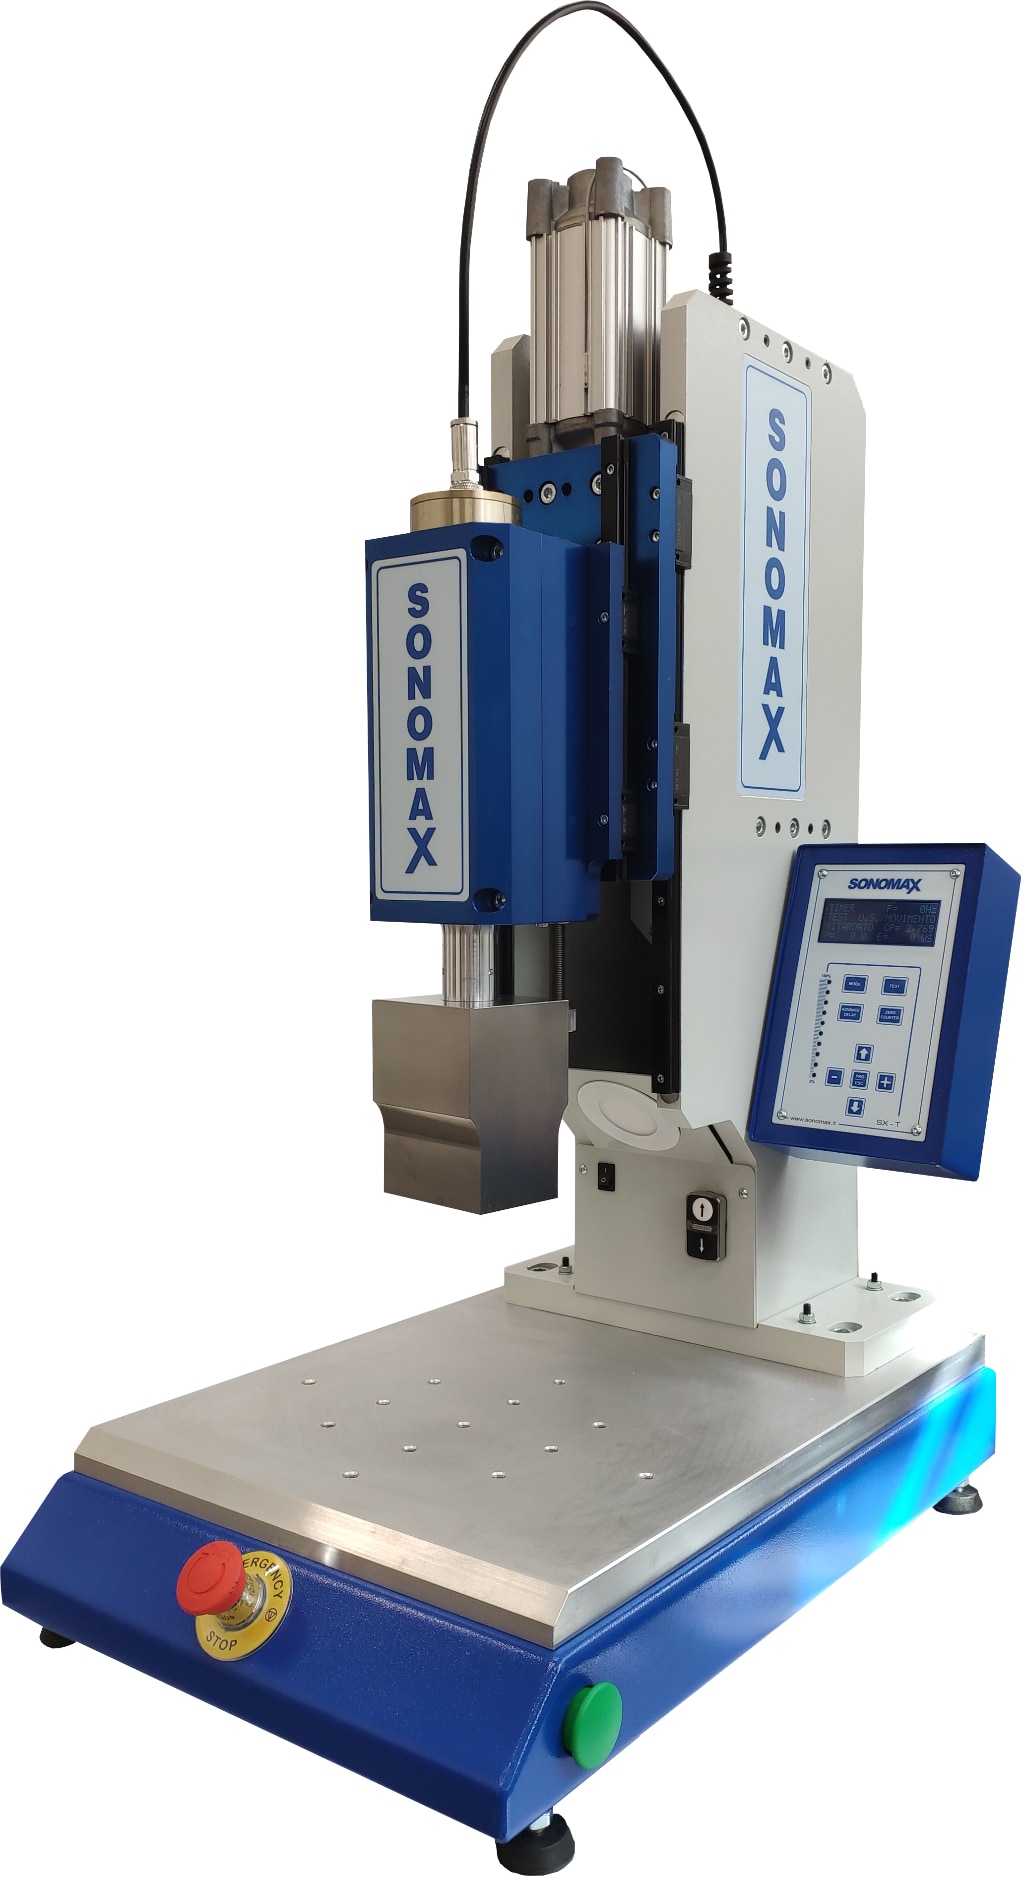 PSX 20 ultrasonic welding machine from Sonomax